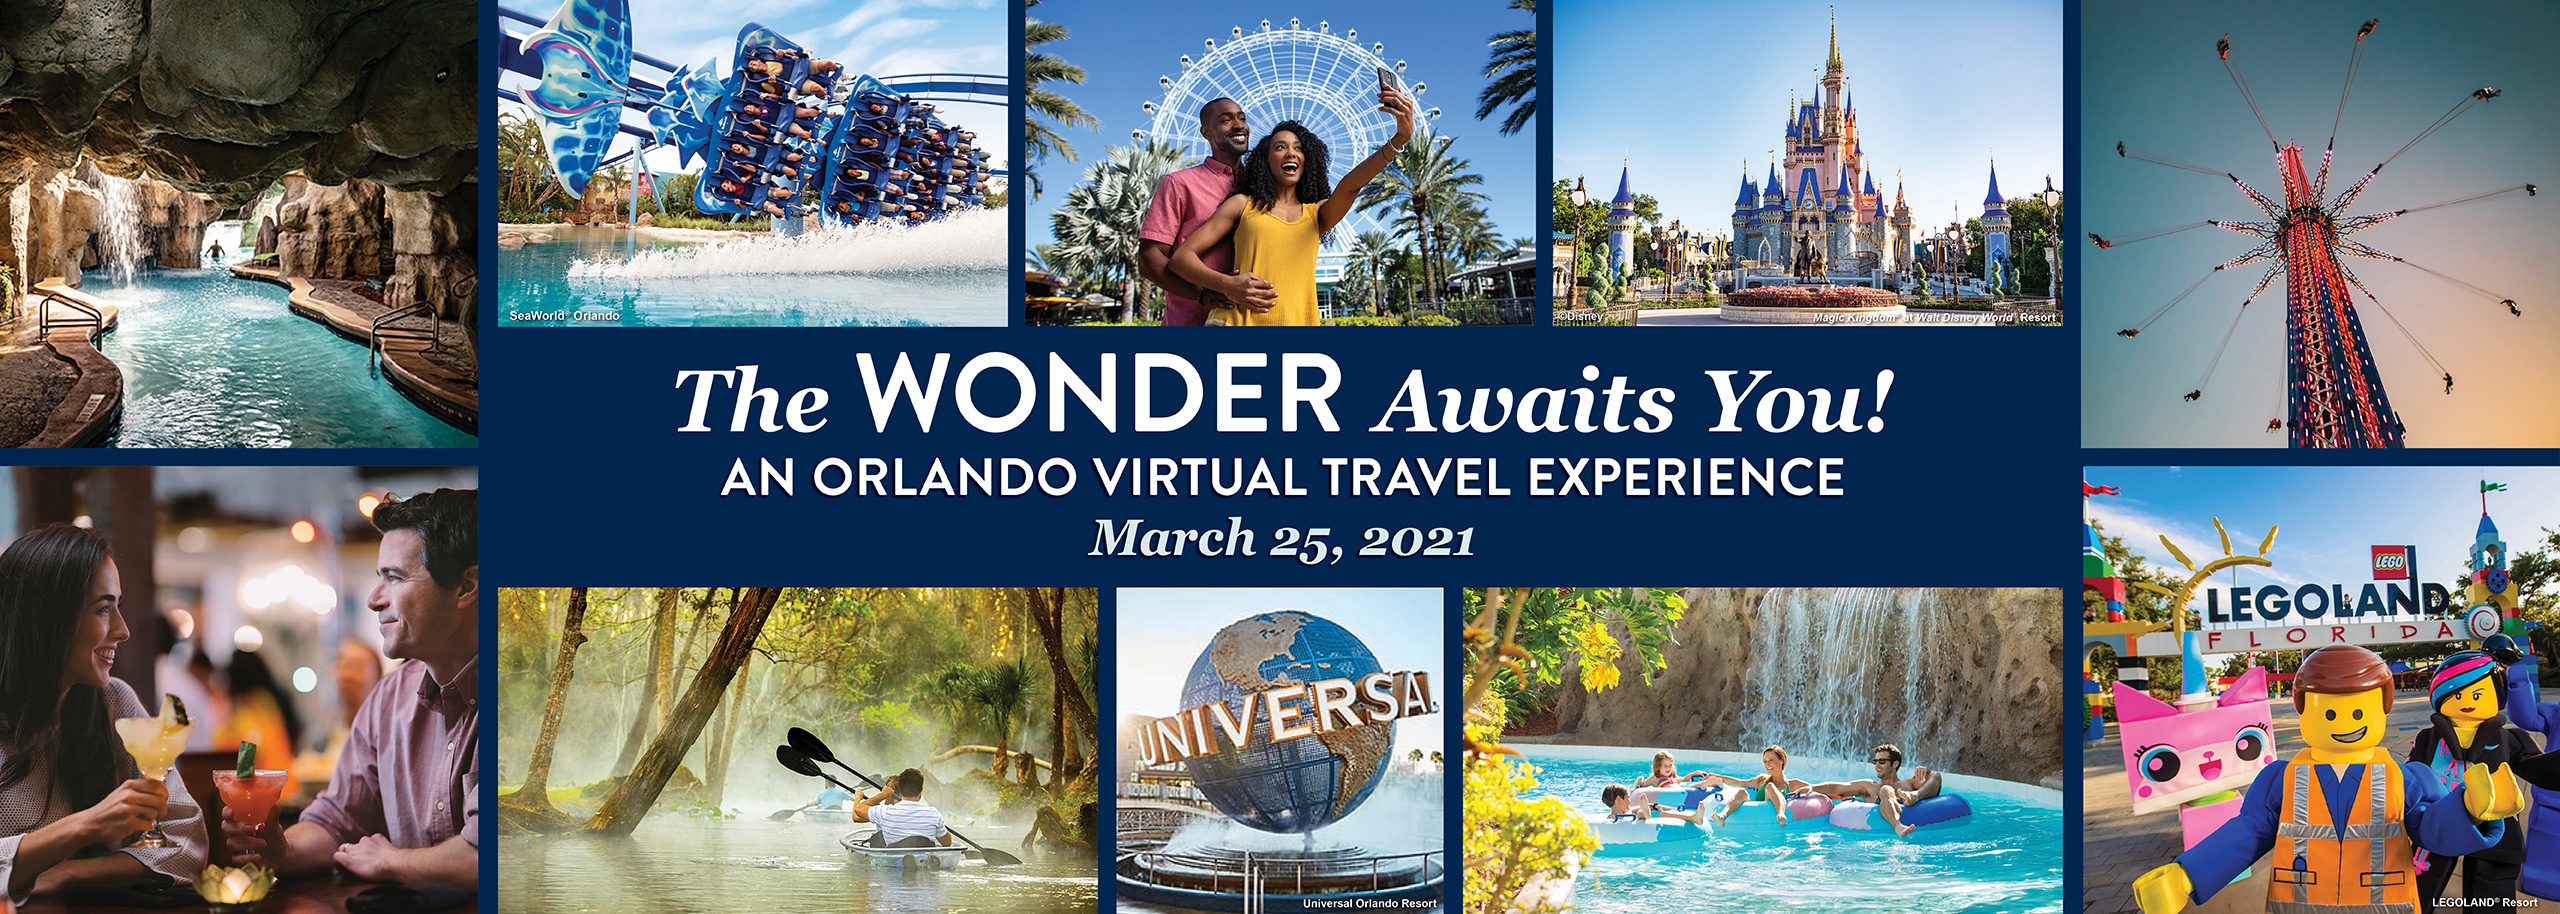 The Wonder Awaits You! Virtual Travel Experience